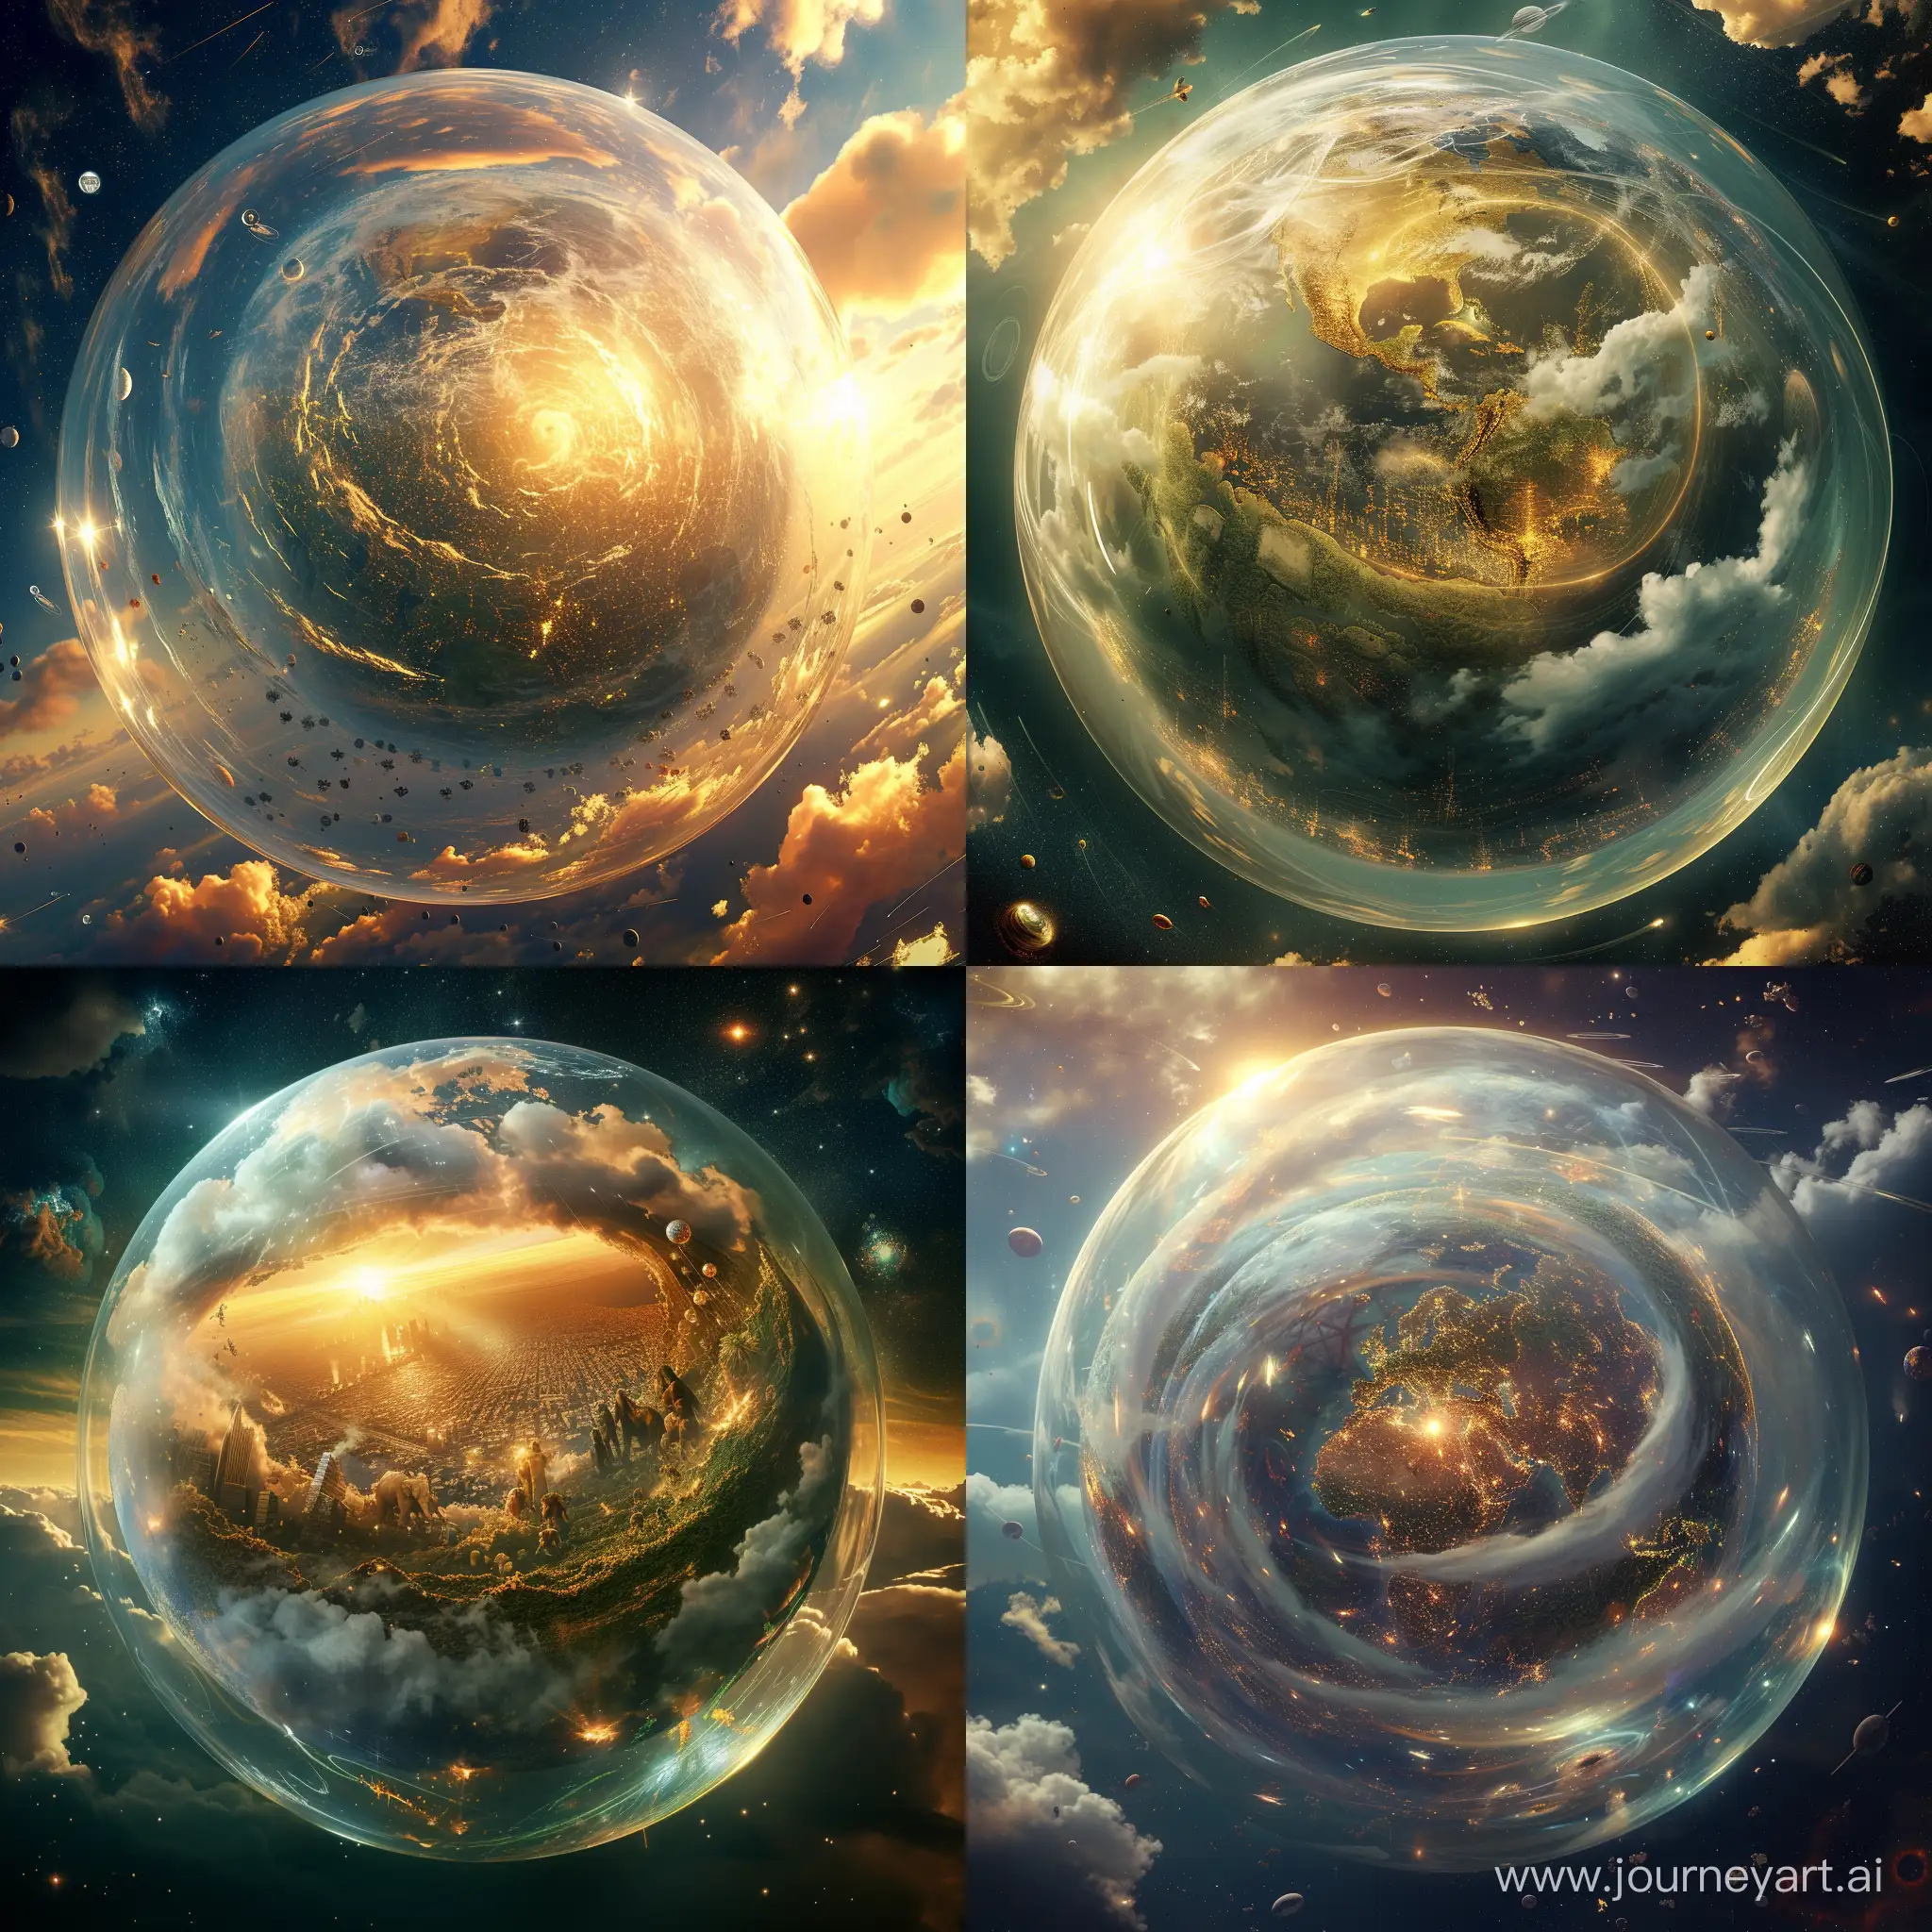 Enchanting-Earth-Crystal-Ball-Mosaic-of-Life-in-8K-Realism